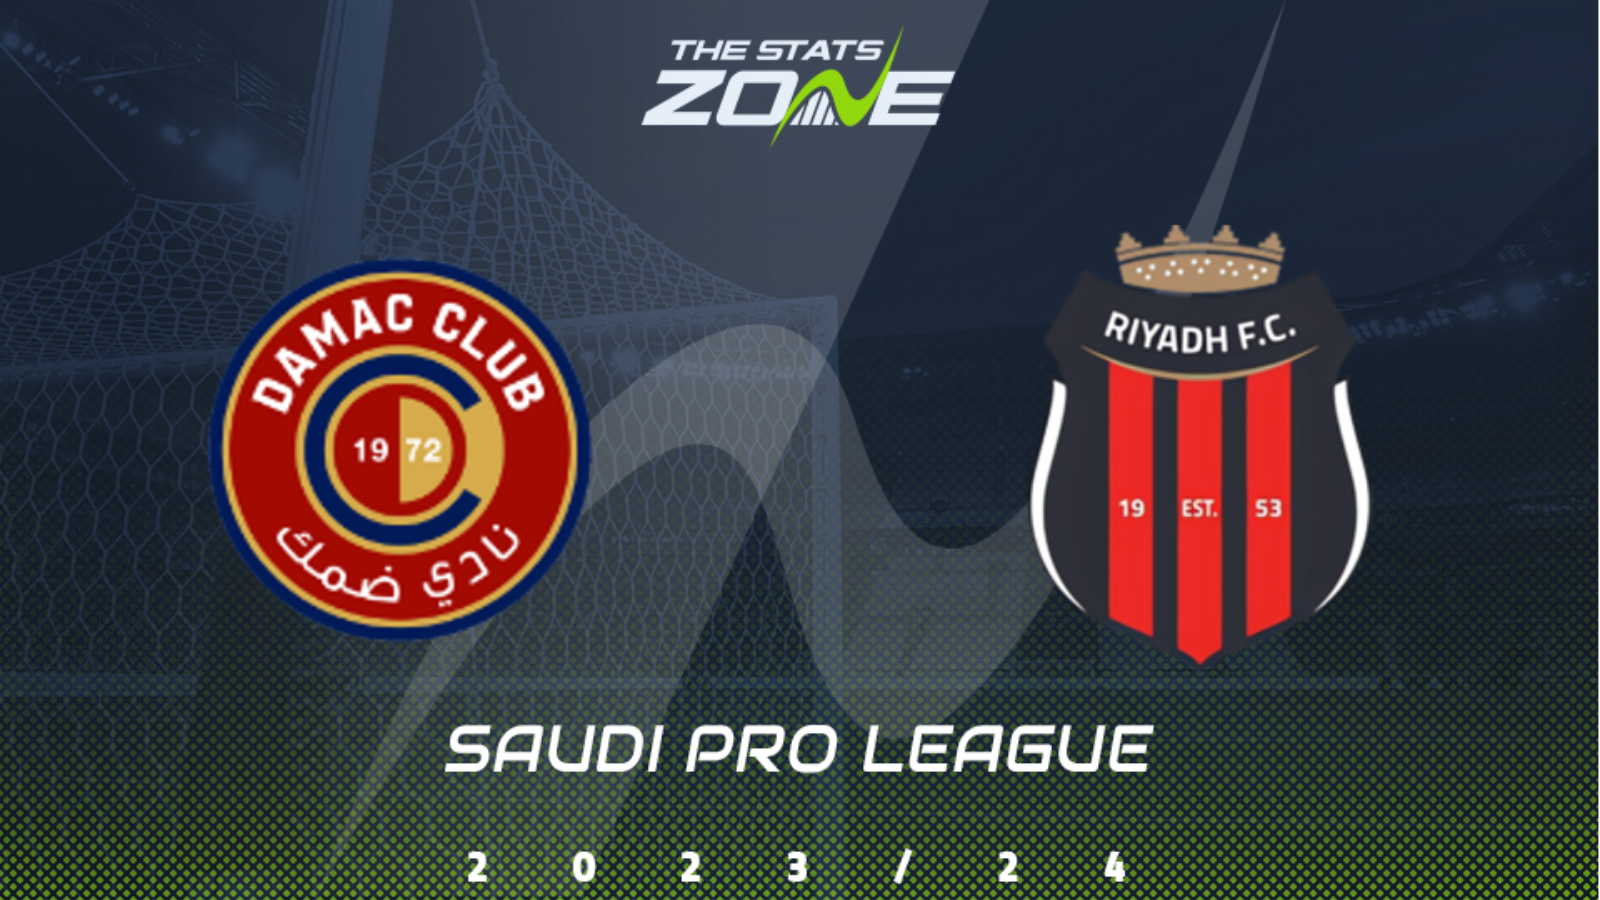 Saudi Pro League standings. Roshn Saudi Pro League background. Saudi Pro League logo без фона. Saudi pro league